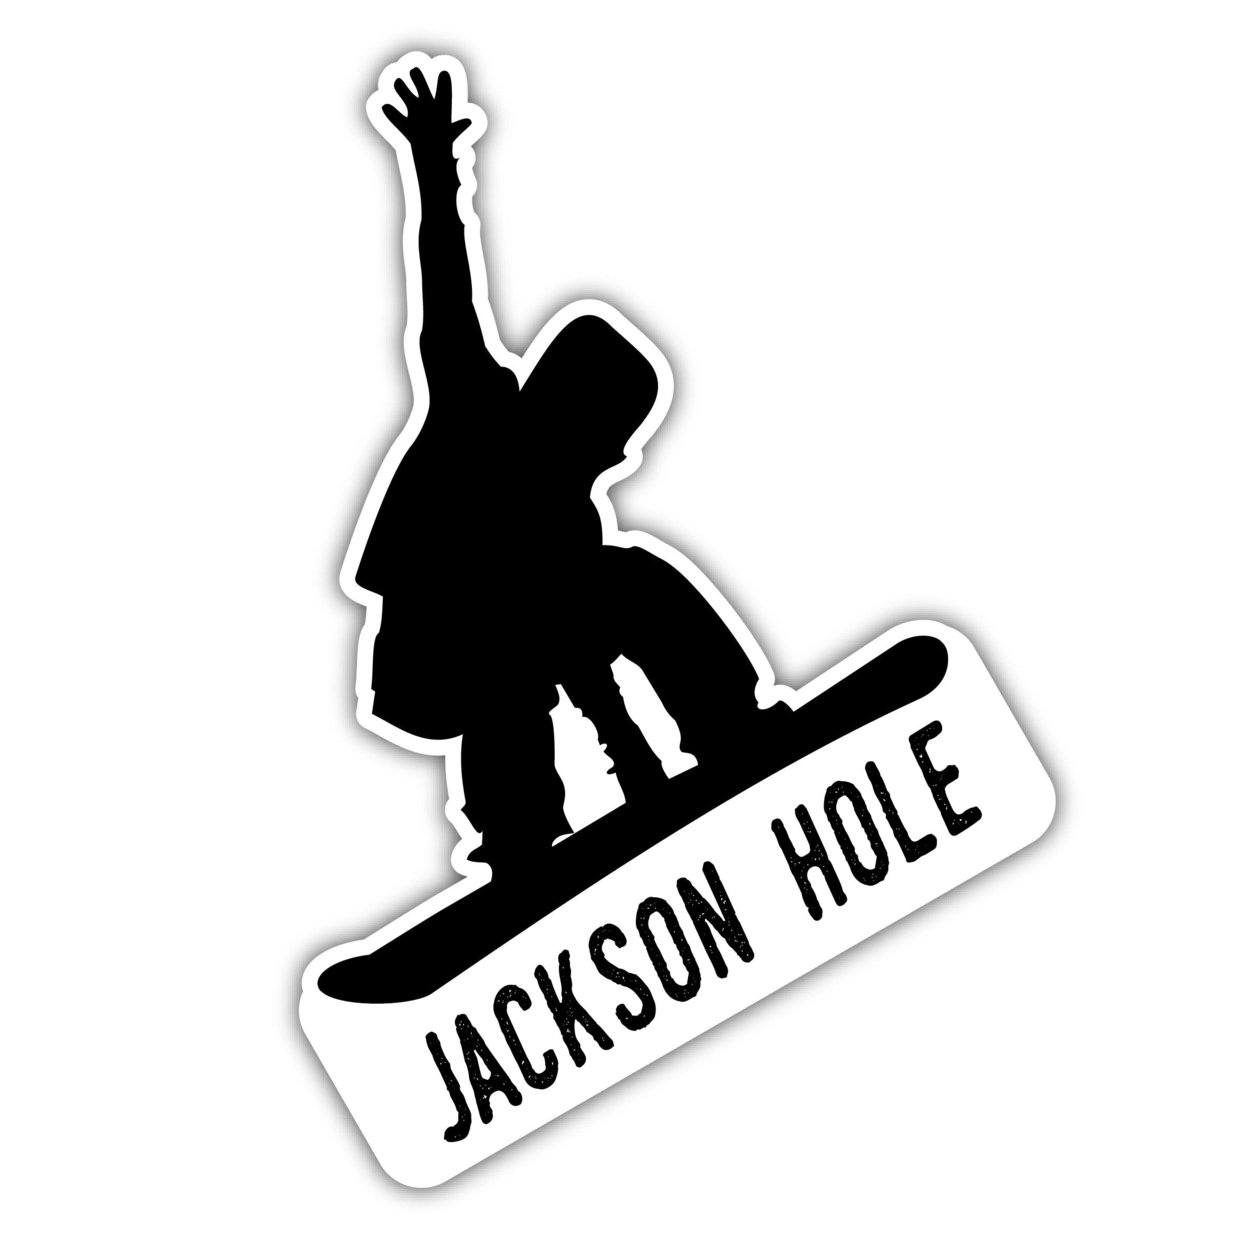 Jackson Hole Wyoming Ski Adventures Souvenir Approximately 5 X 2.5-Inch Vinyl Decal Sticker Goggle Design